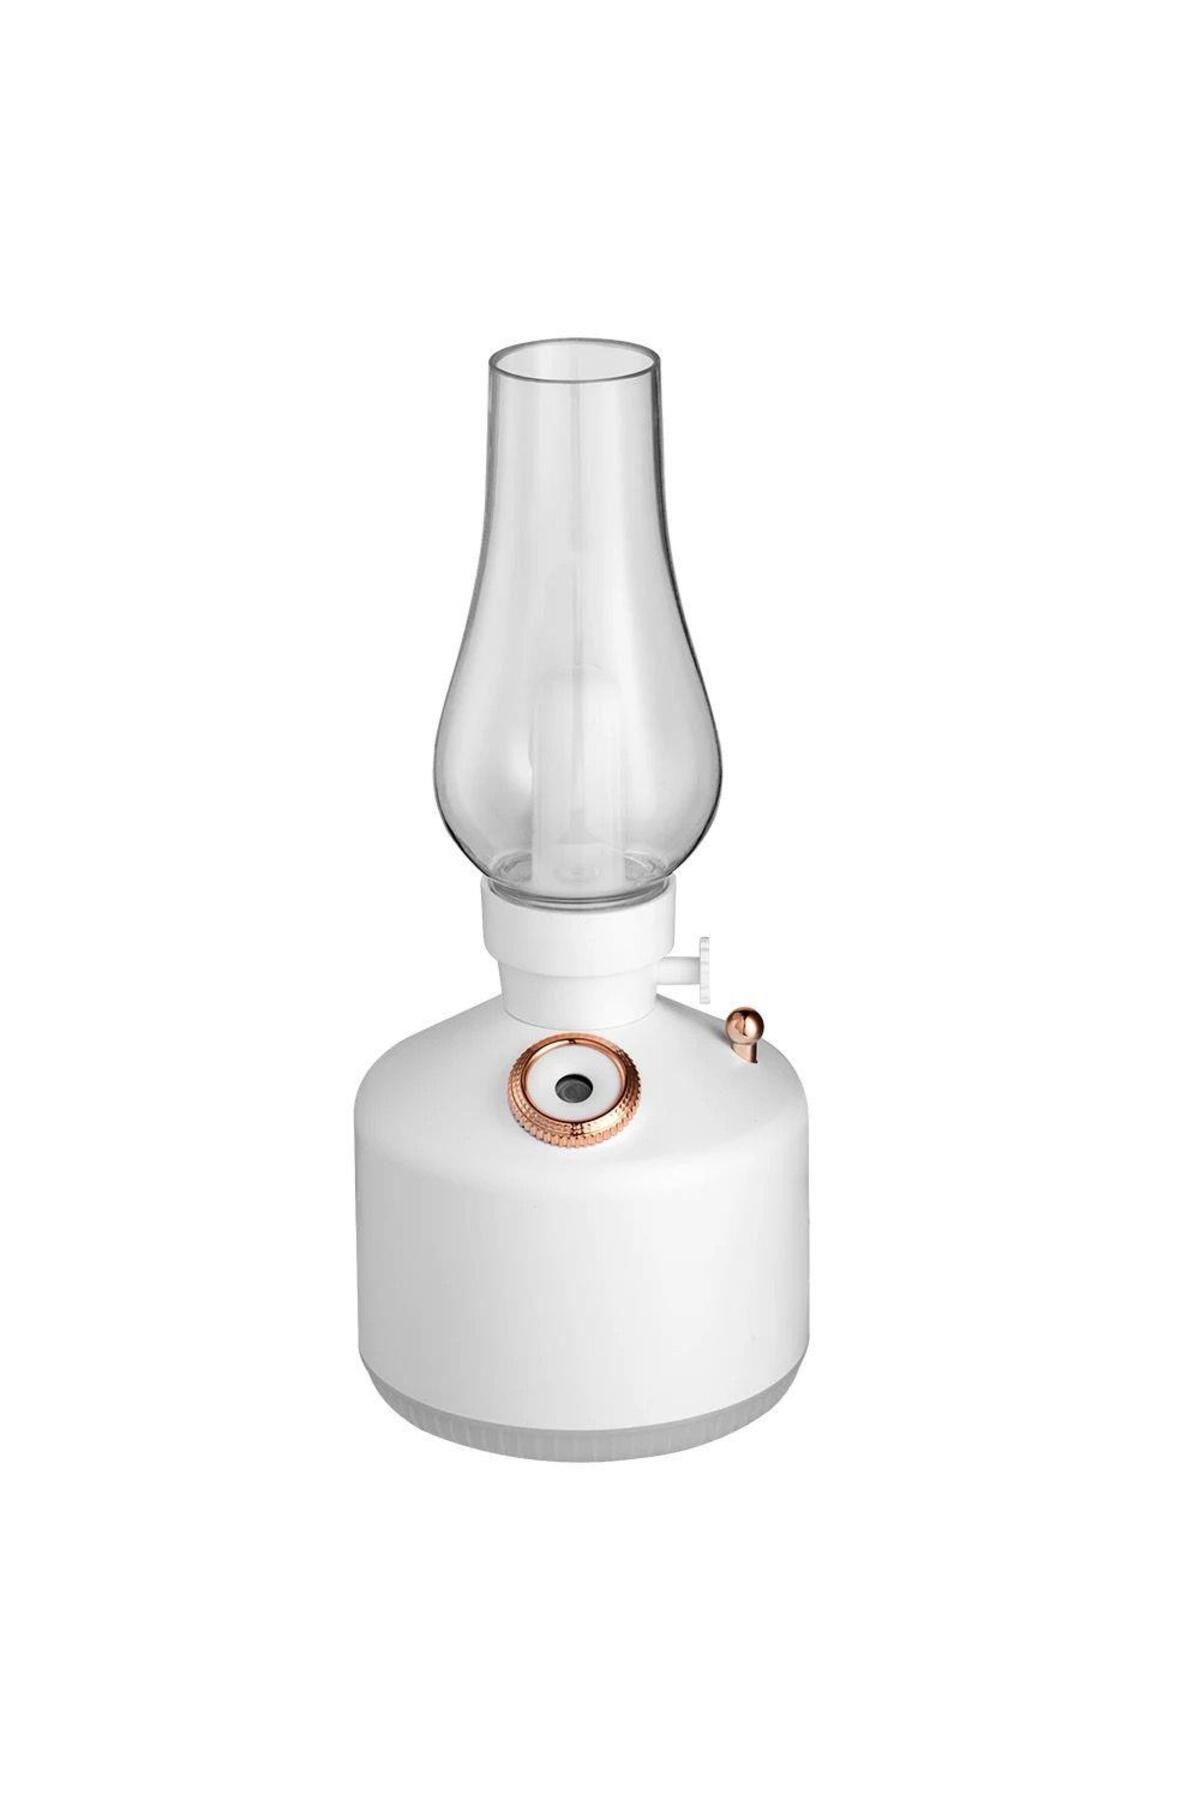 ROSSEV Humidifier Şarj Edilebilir Beyaz Dekoratif Lamba Kandil 300ml G2020A